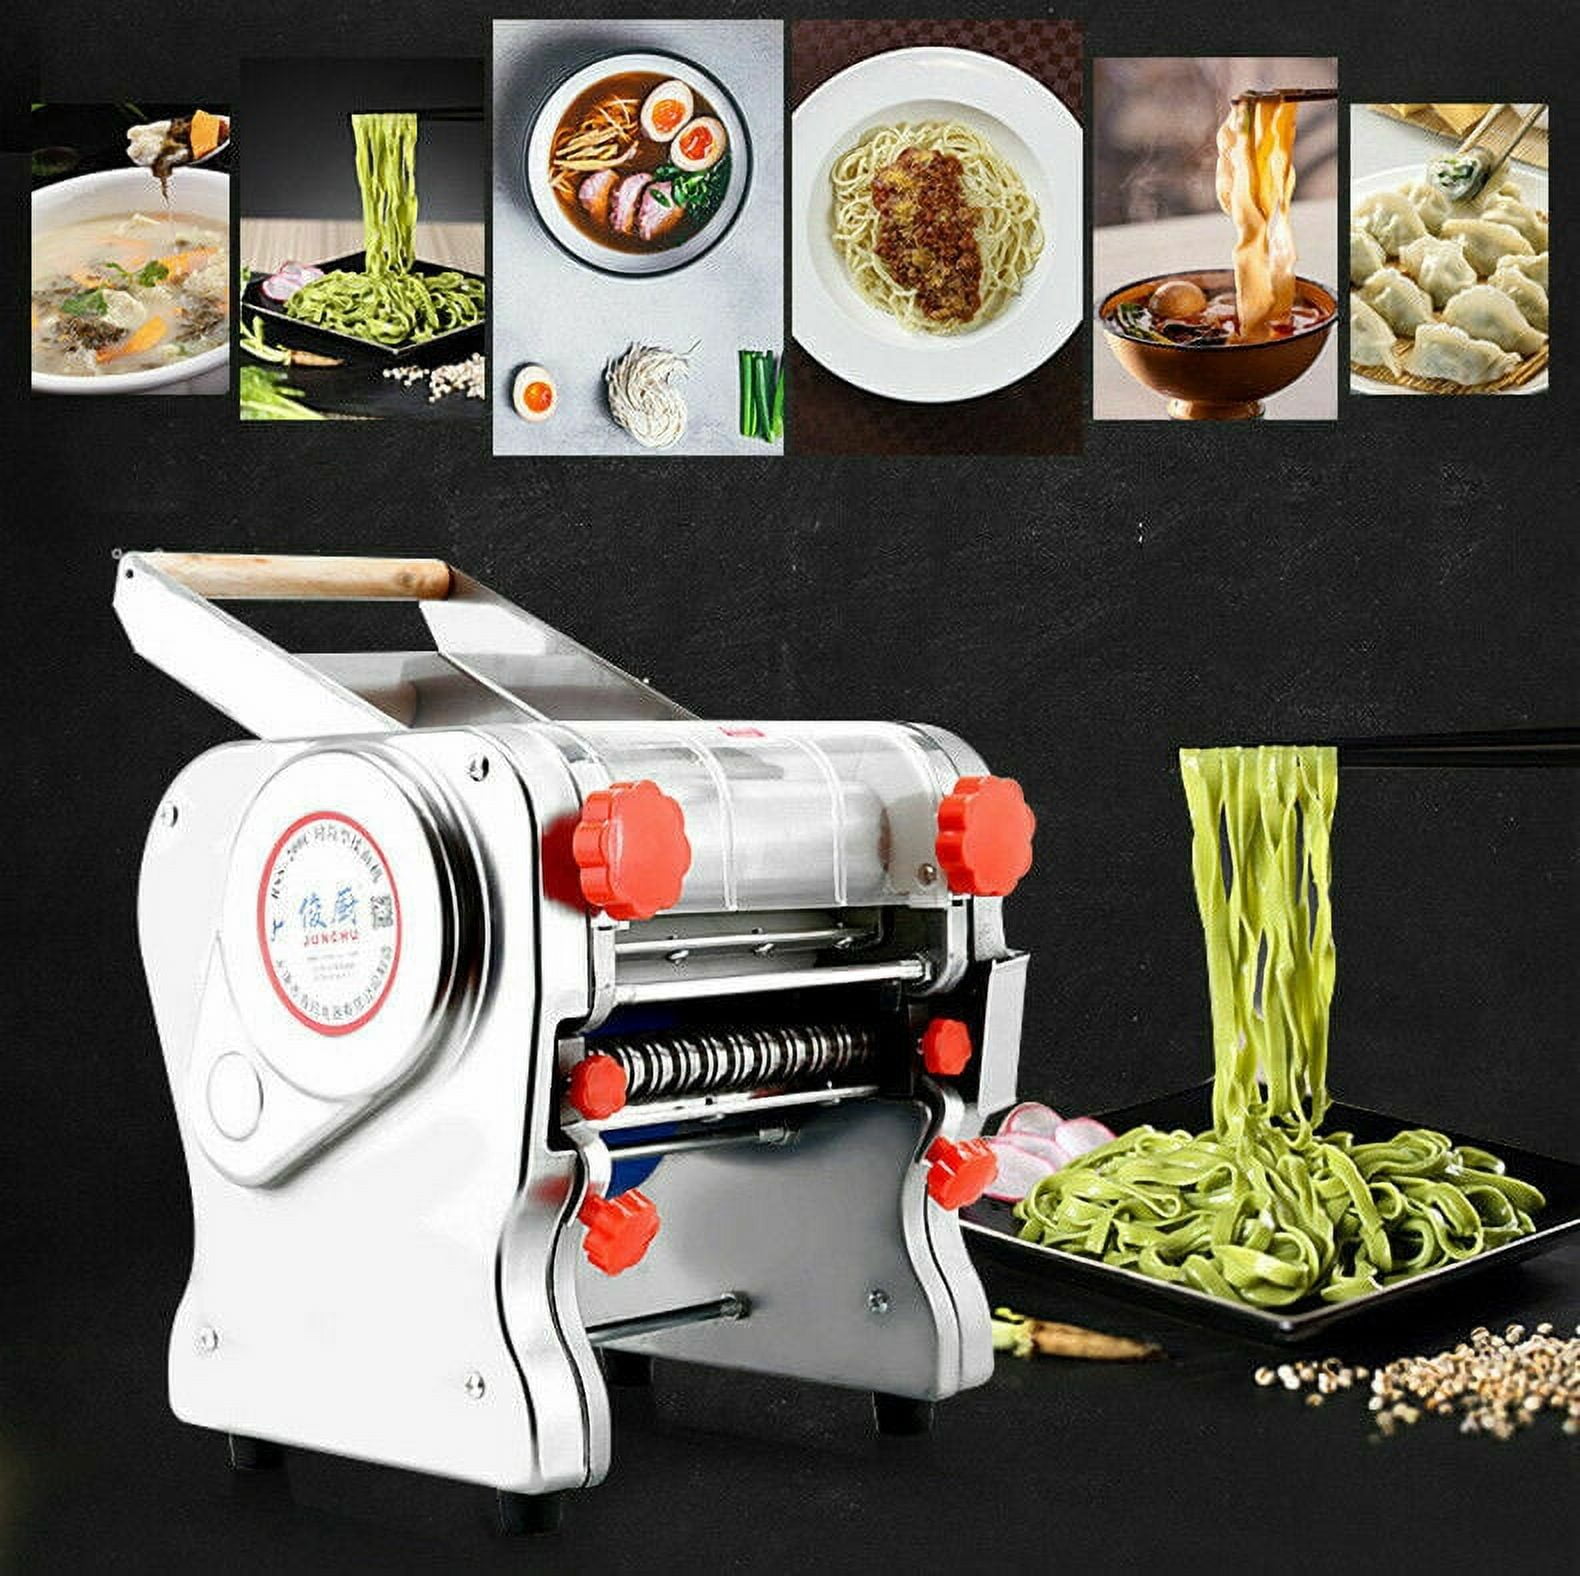 YMJOINMX Electric Pasta Maker Portable Automatic Pasta Maker Machine  Handheld Electric Pasta Noodle Maker Machine